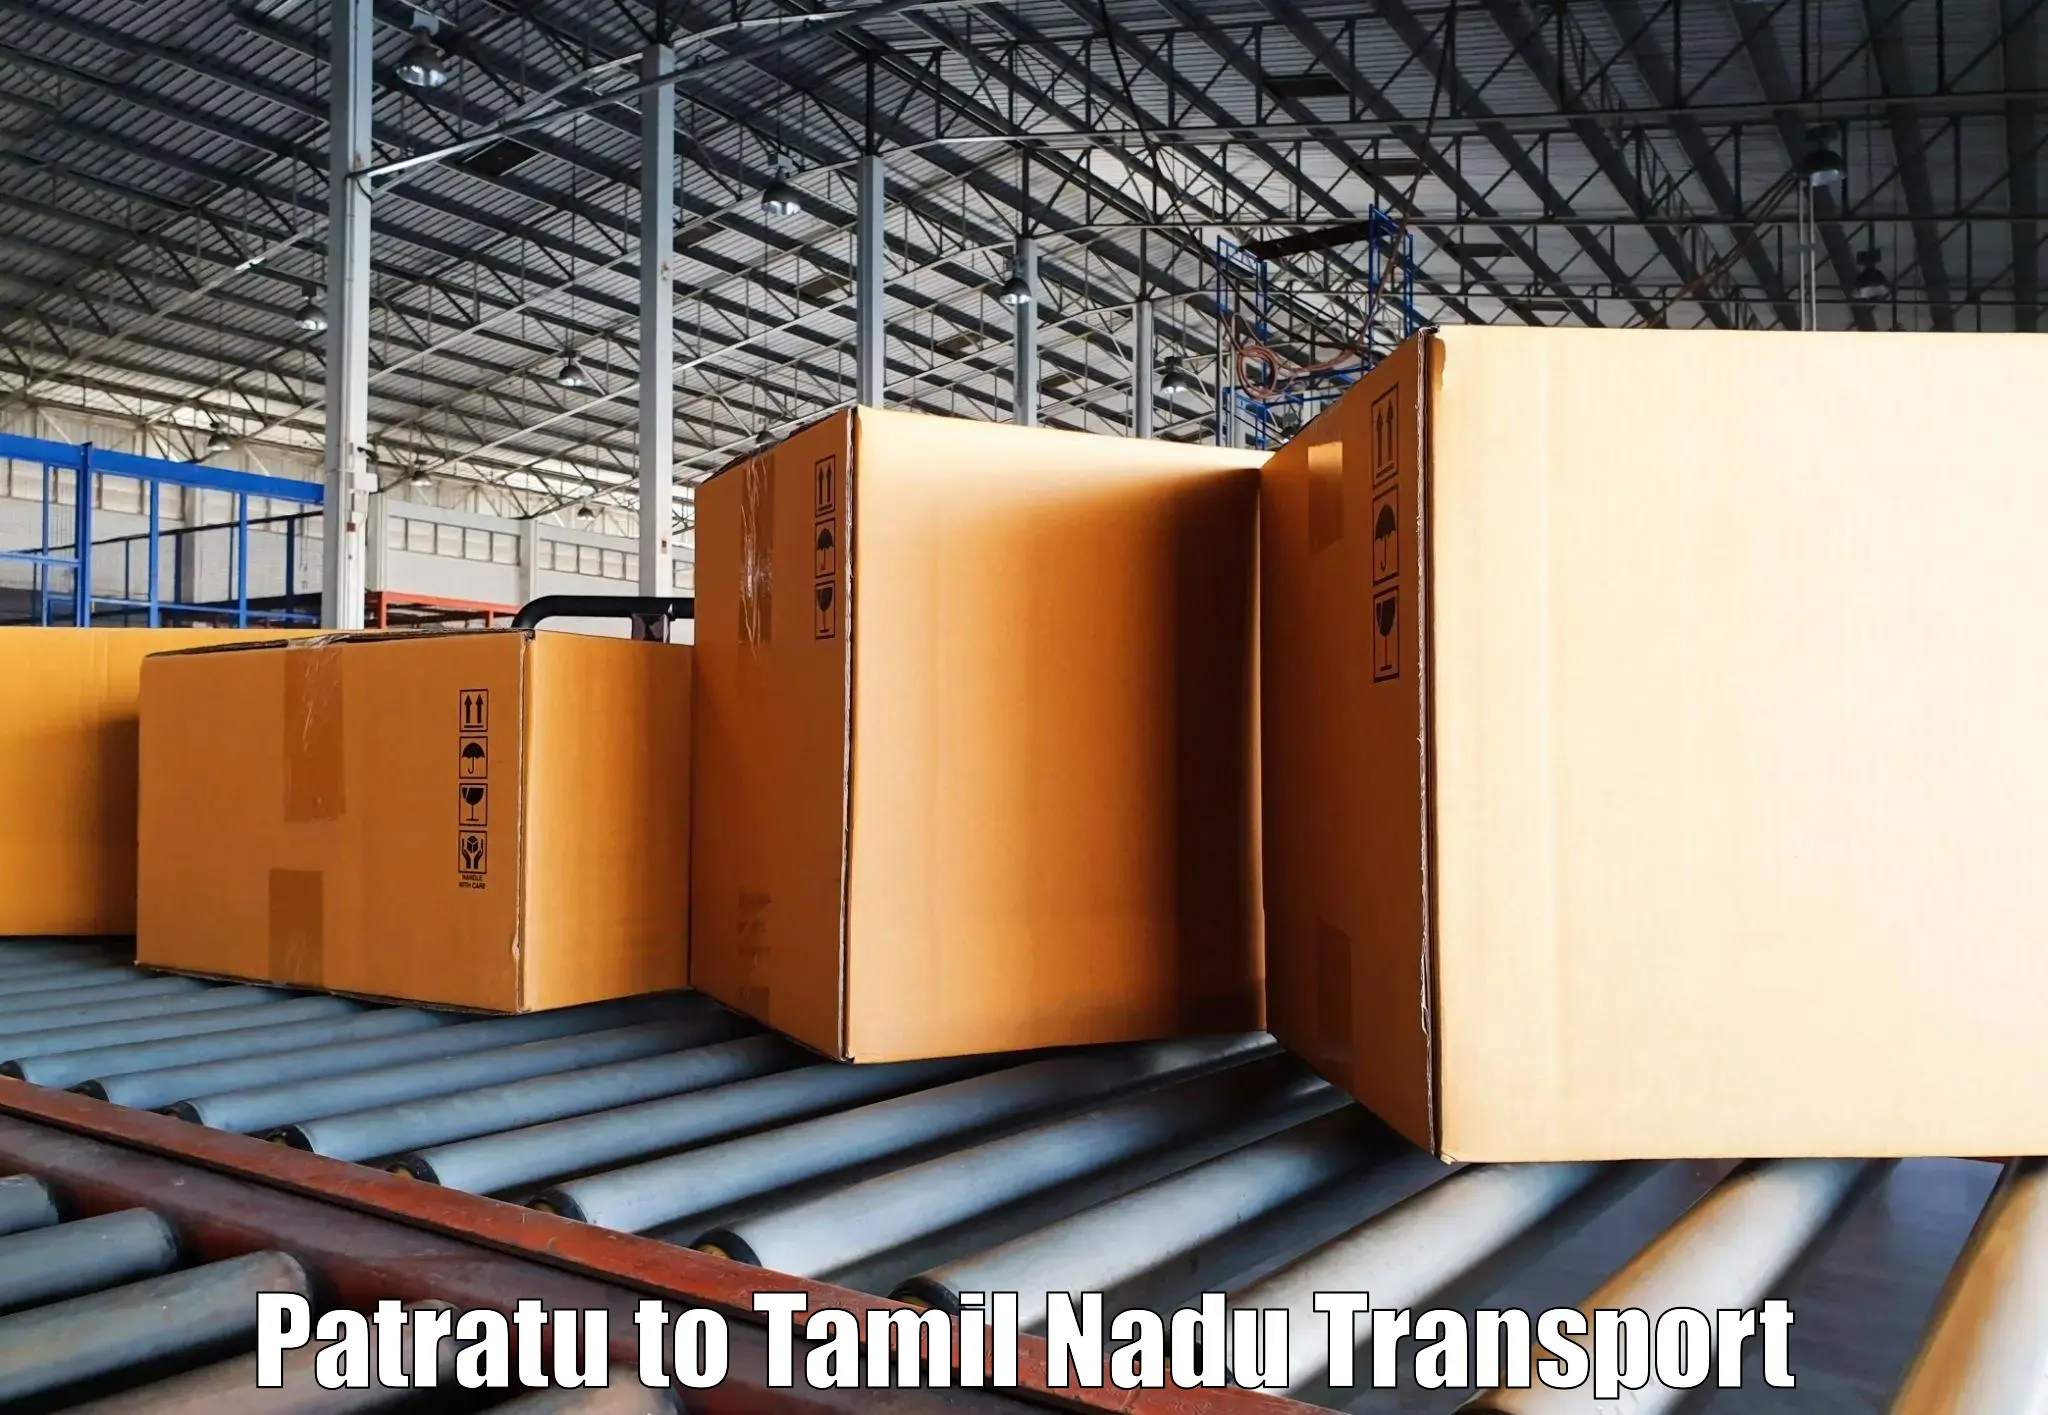 Shipping partner Patratu to Tamil Nadu